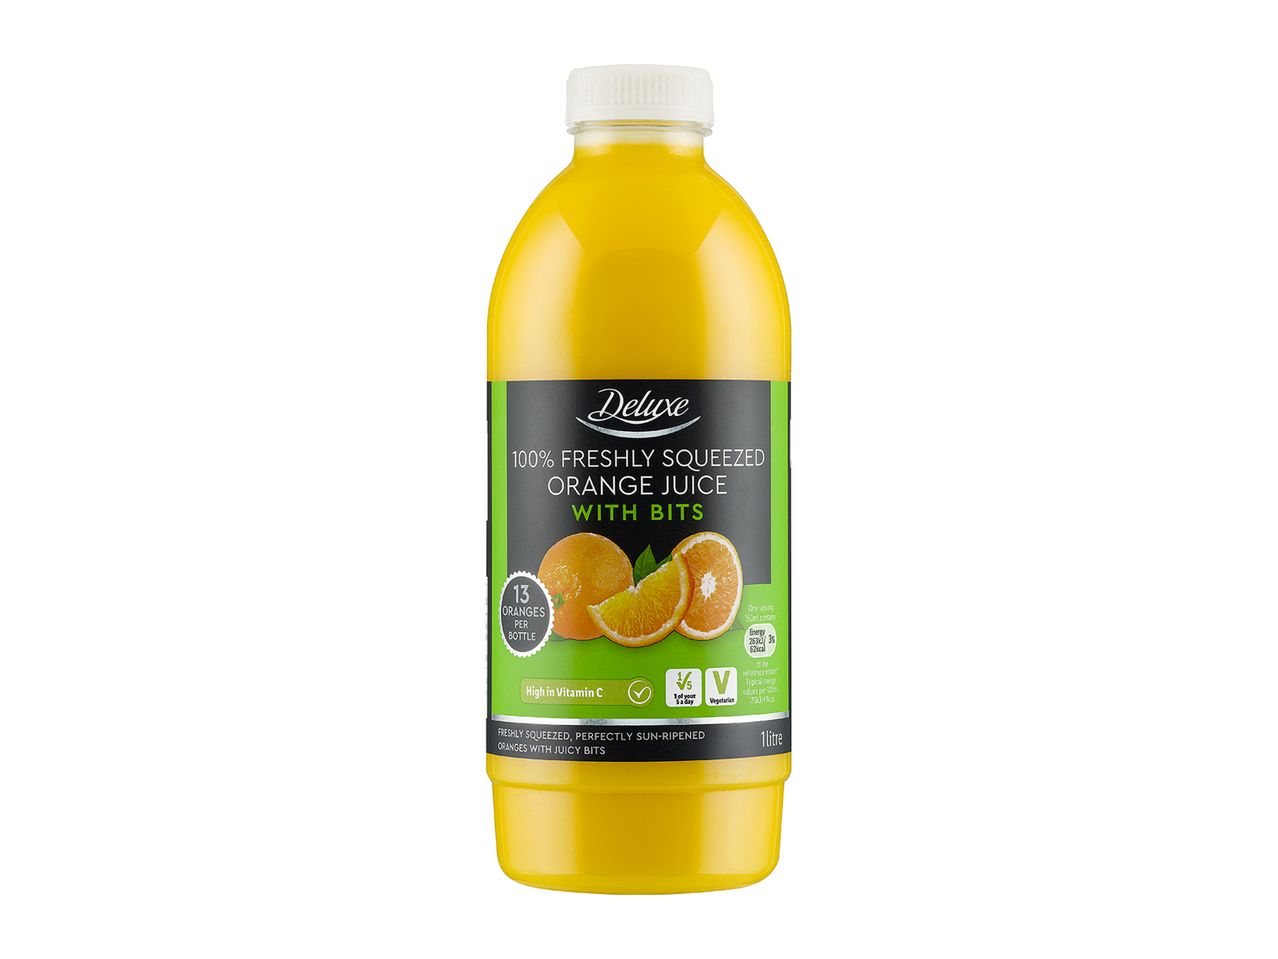 Go to full screen view: Deluxe Orange Juice - Image 2